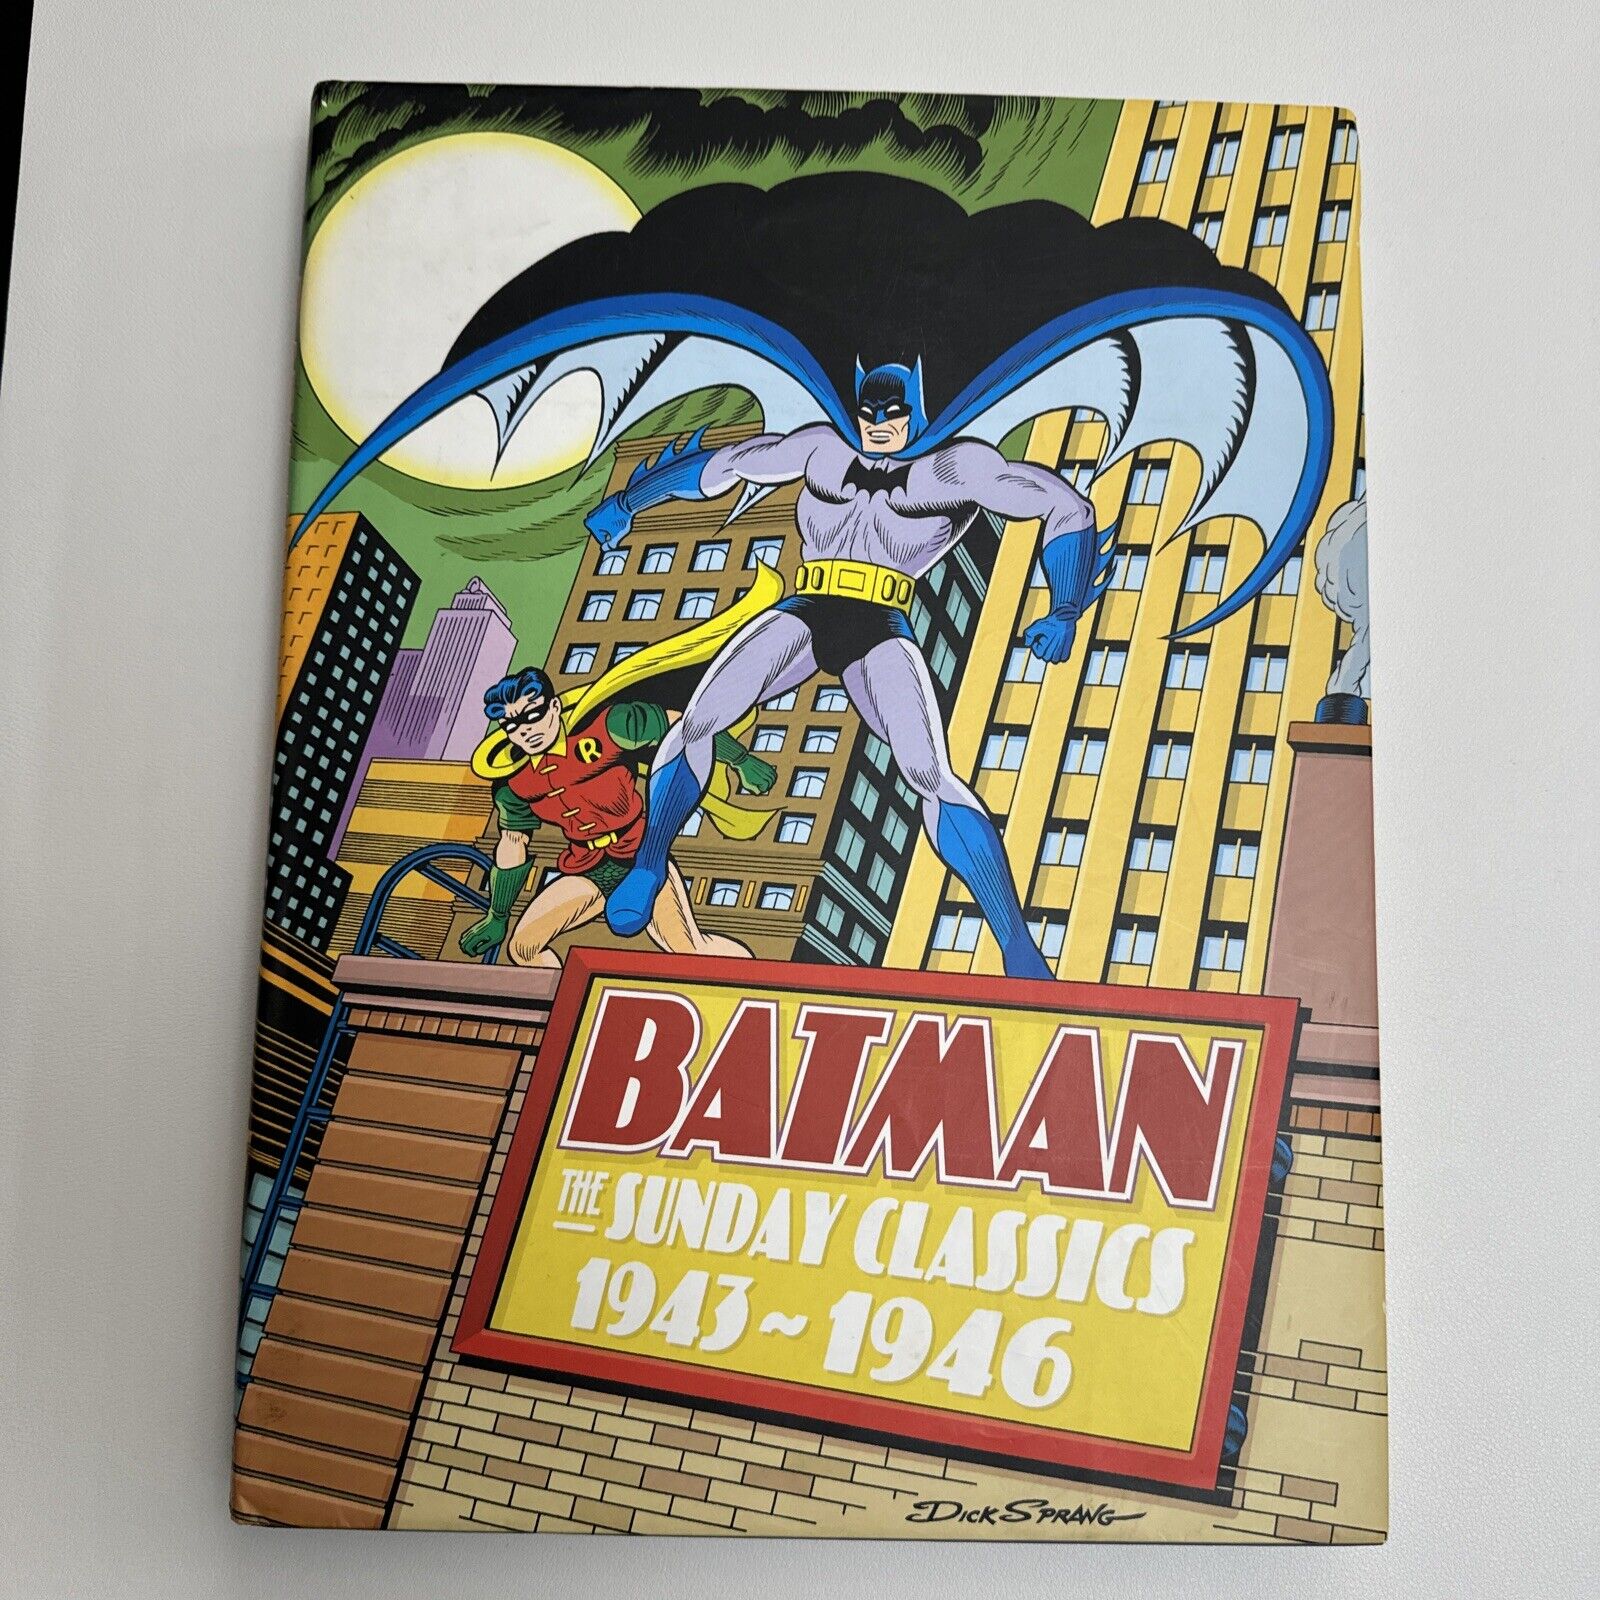 Batman: The Sunday Classics 1943-1946 Hardcover Book Used